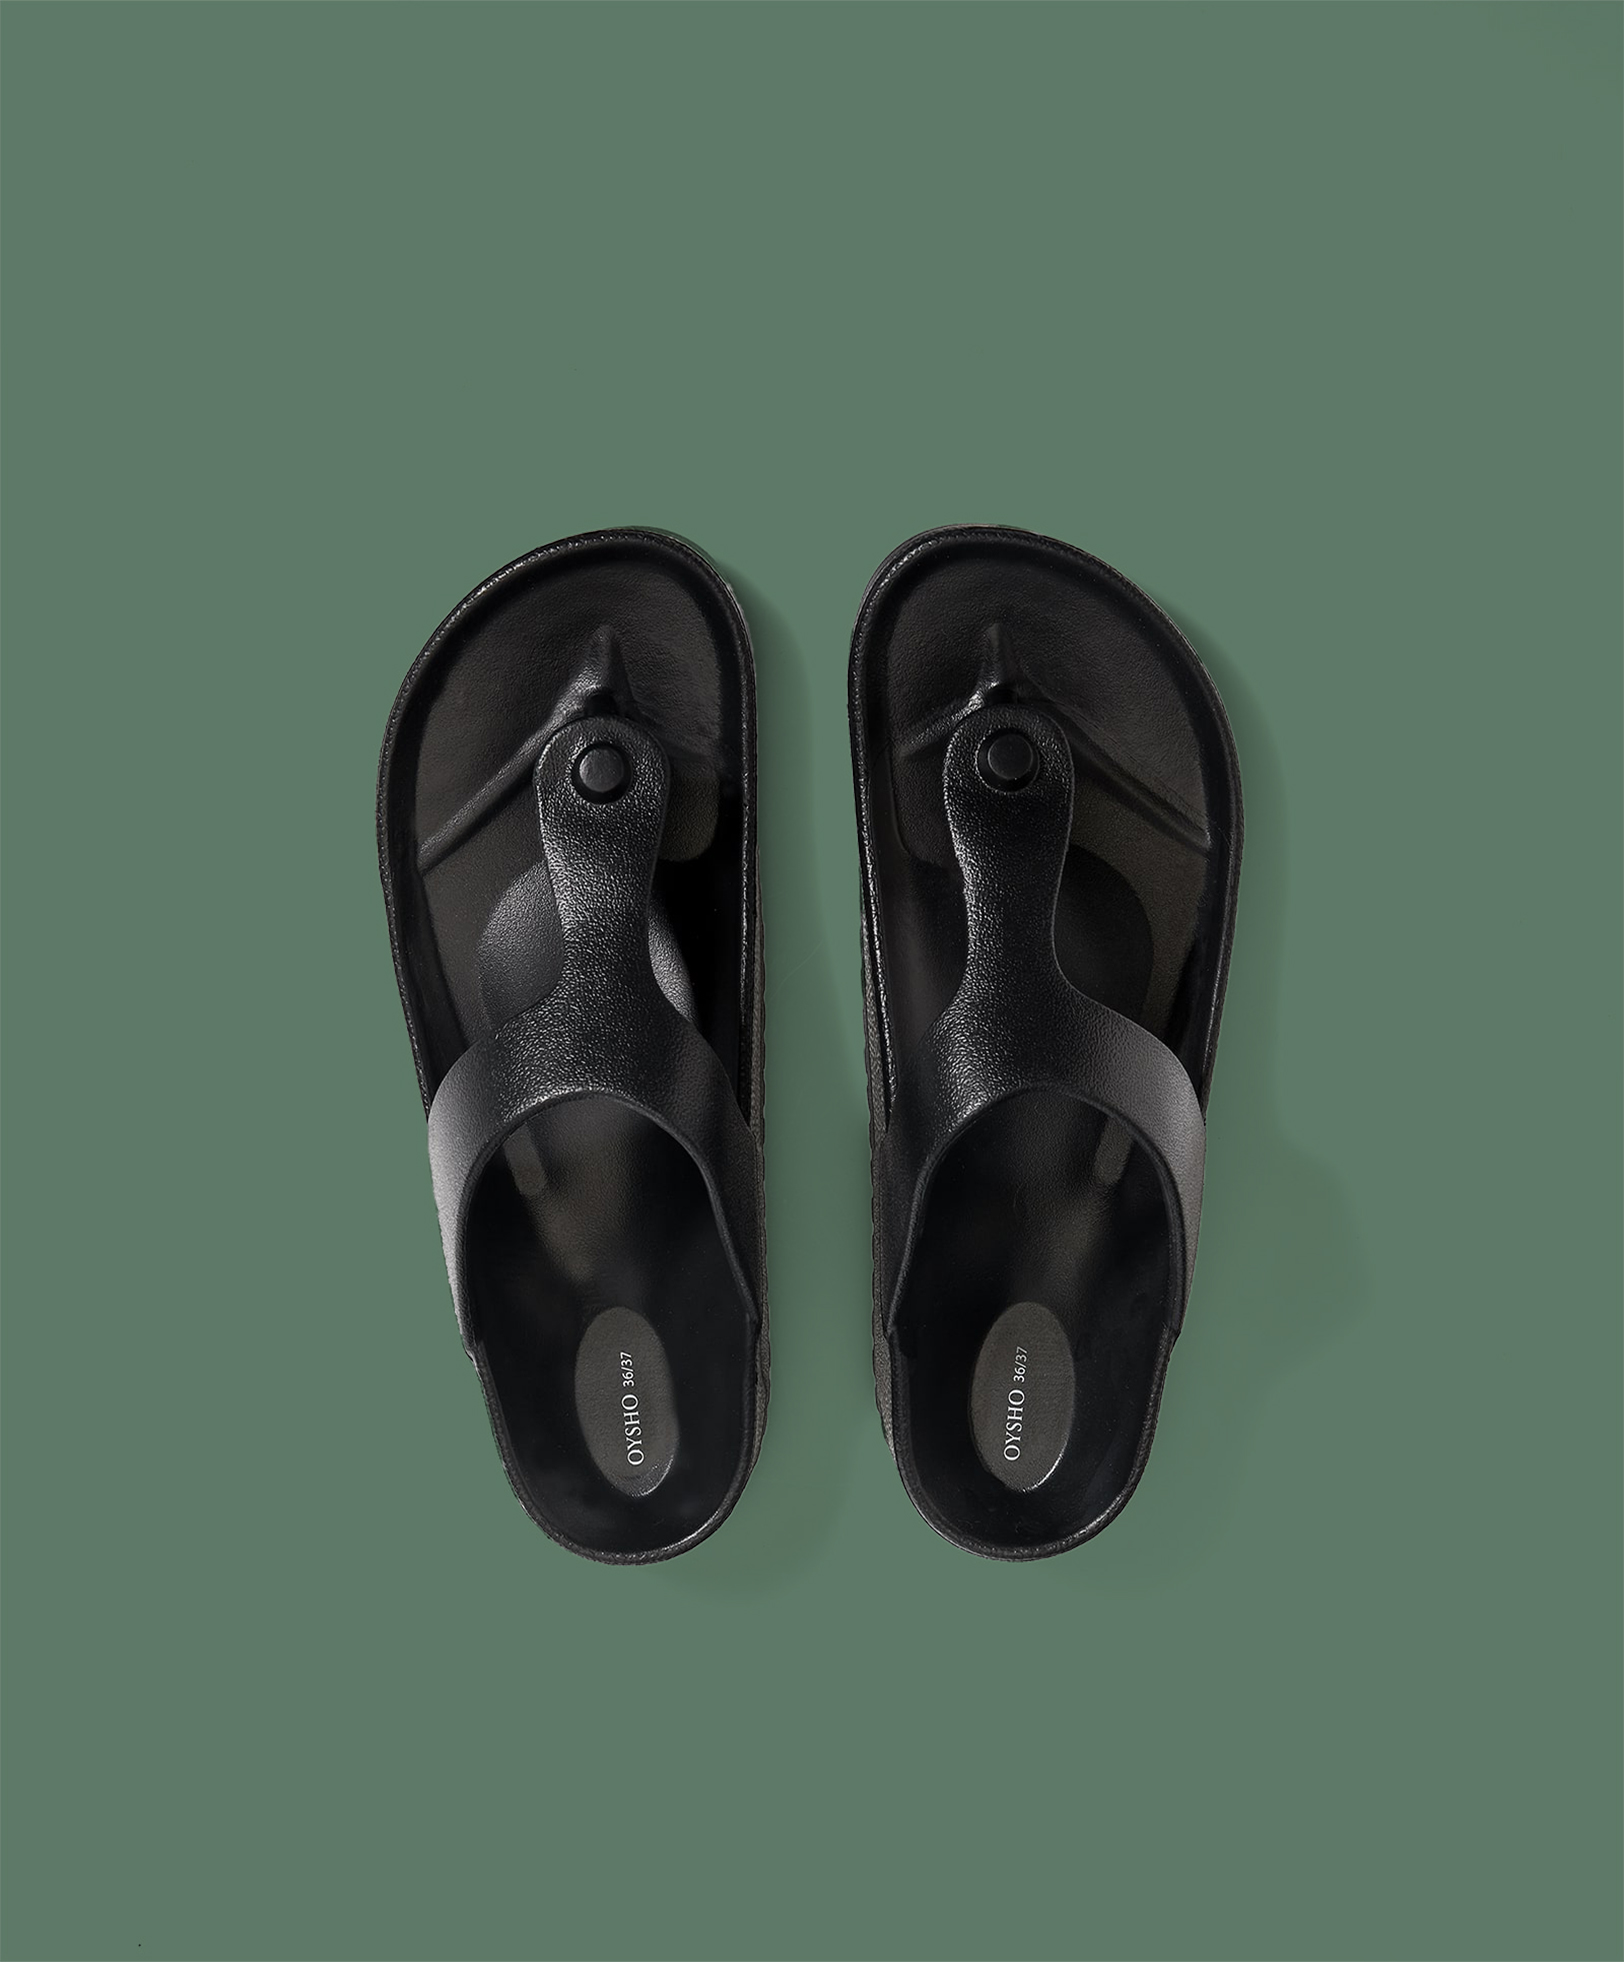 Pool sandals